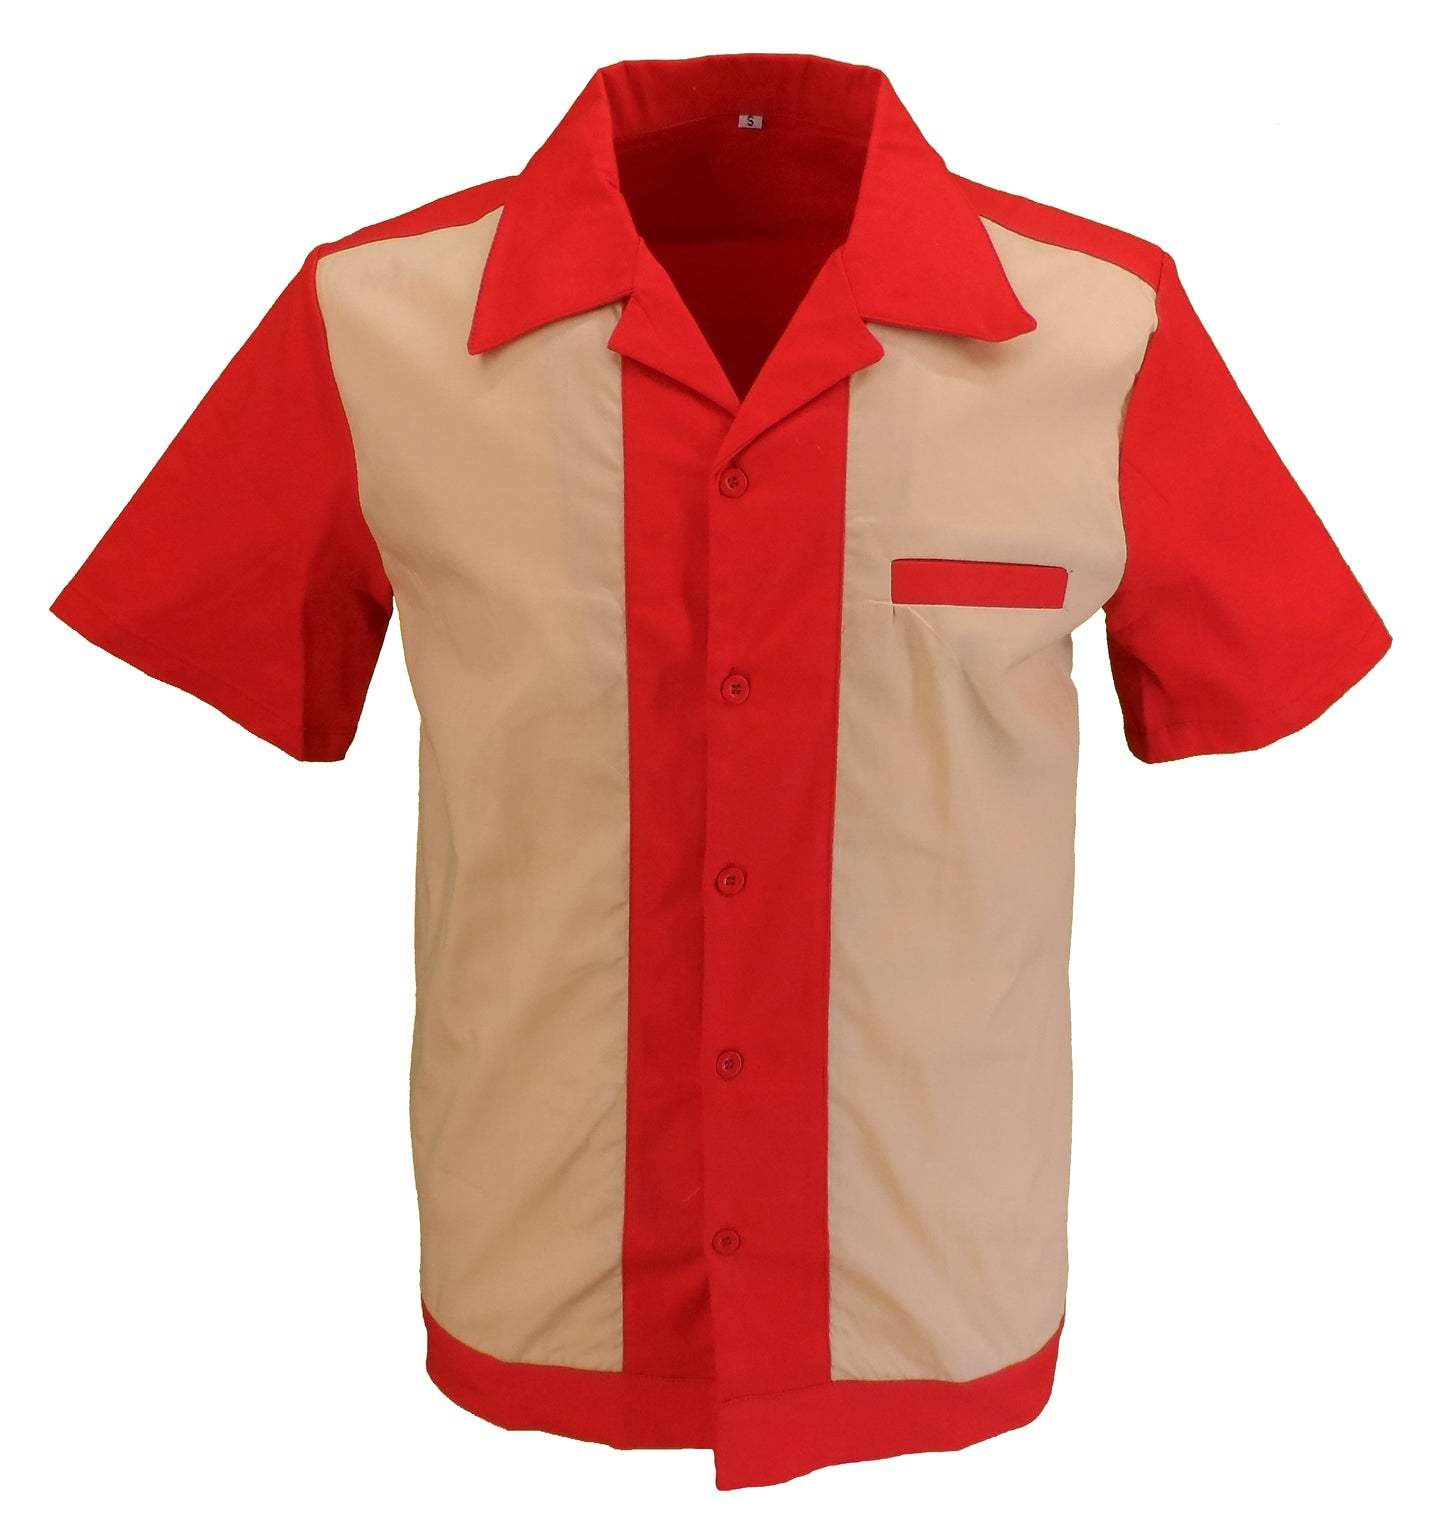 Bowling Shirts روكابيلي للرجال Mazeys باللون الأحمر/الكريمي في الخمسينيات